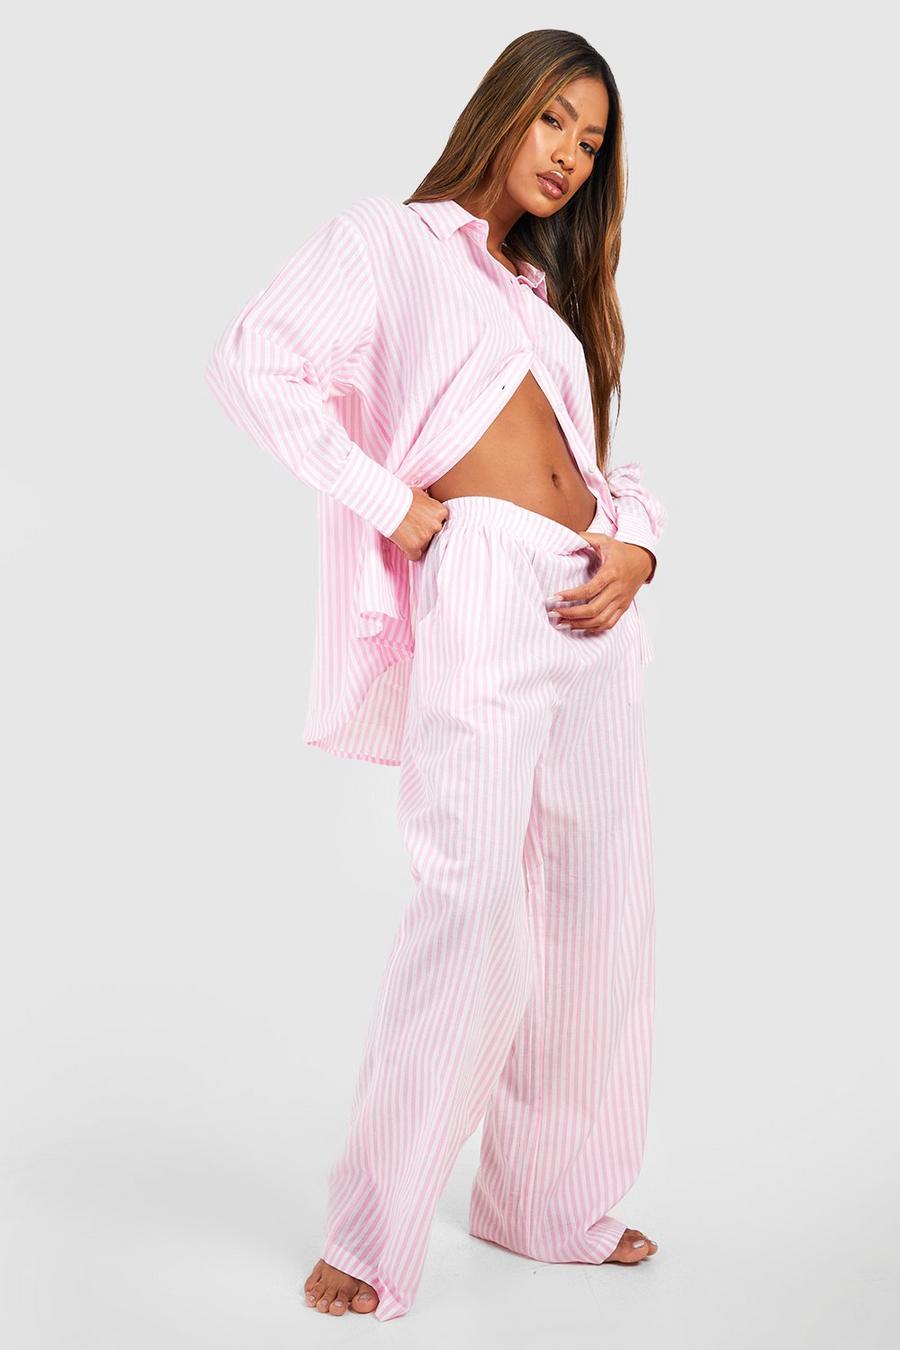 Nadelstreifen Pyjamahose aus Baumwolle, Pink rose